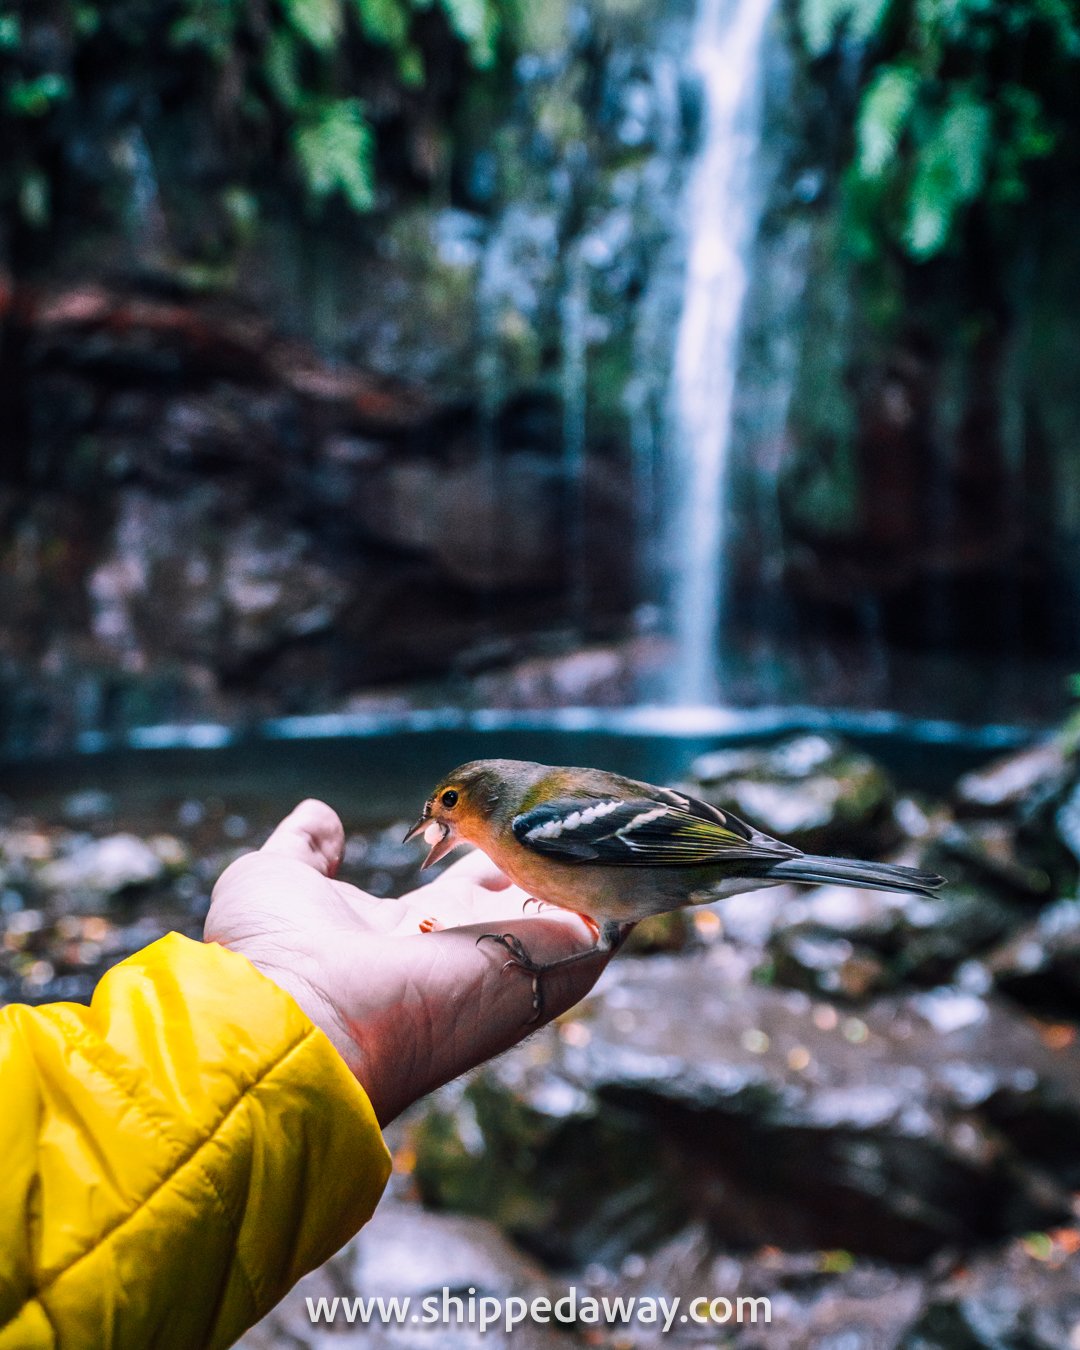 Feeding birds at 25 Fontes waterfall in Madeira